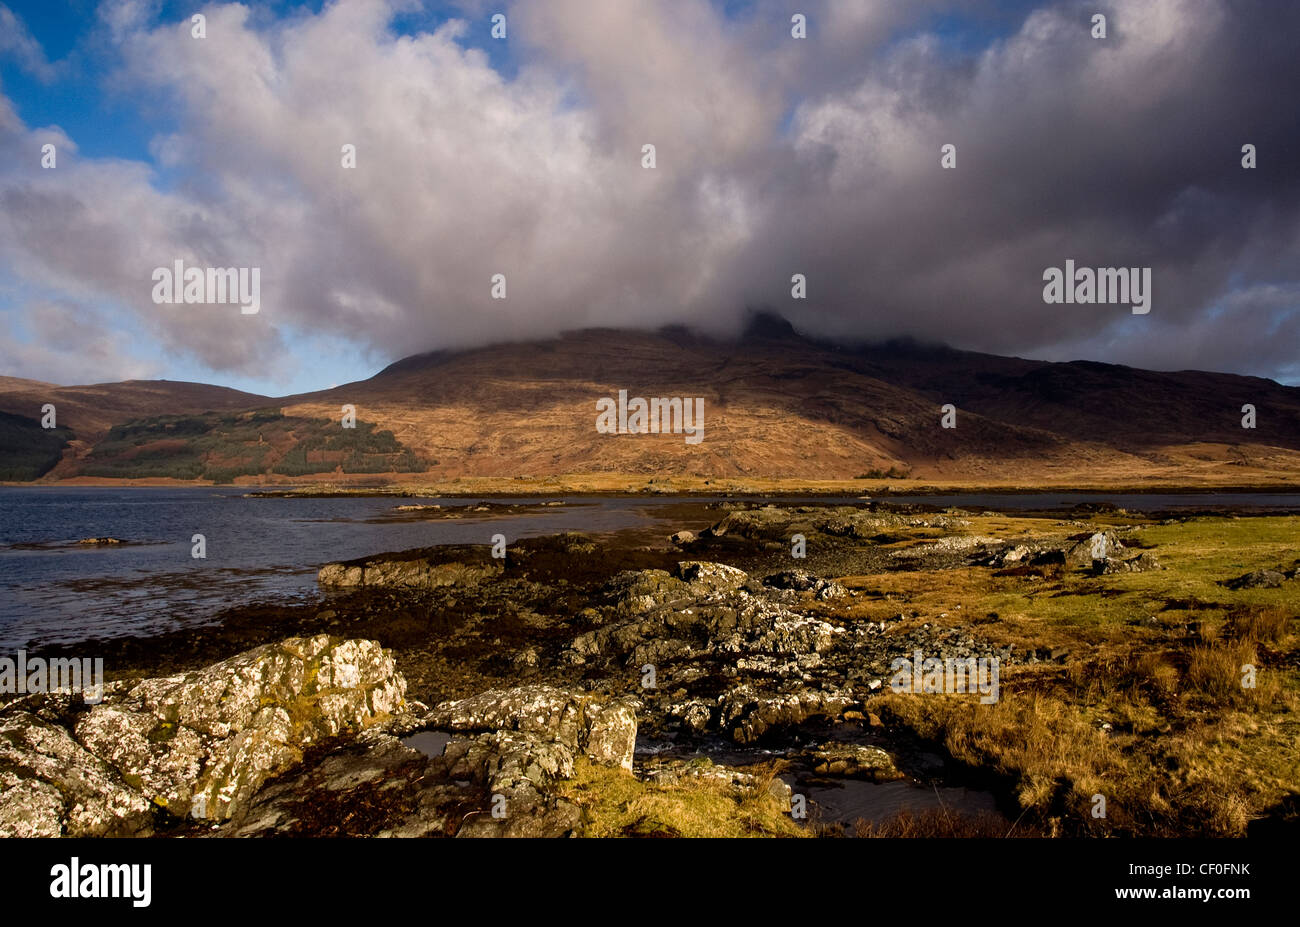 Un paisaje de loch scridain Isle Of Mull, frente a la costa oeste de Escocia. Foto de stock